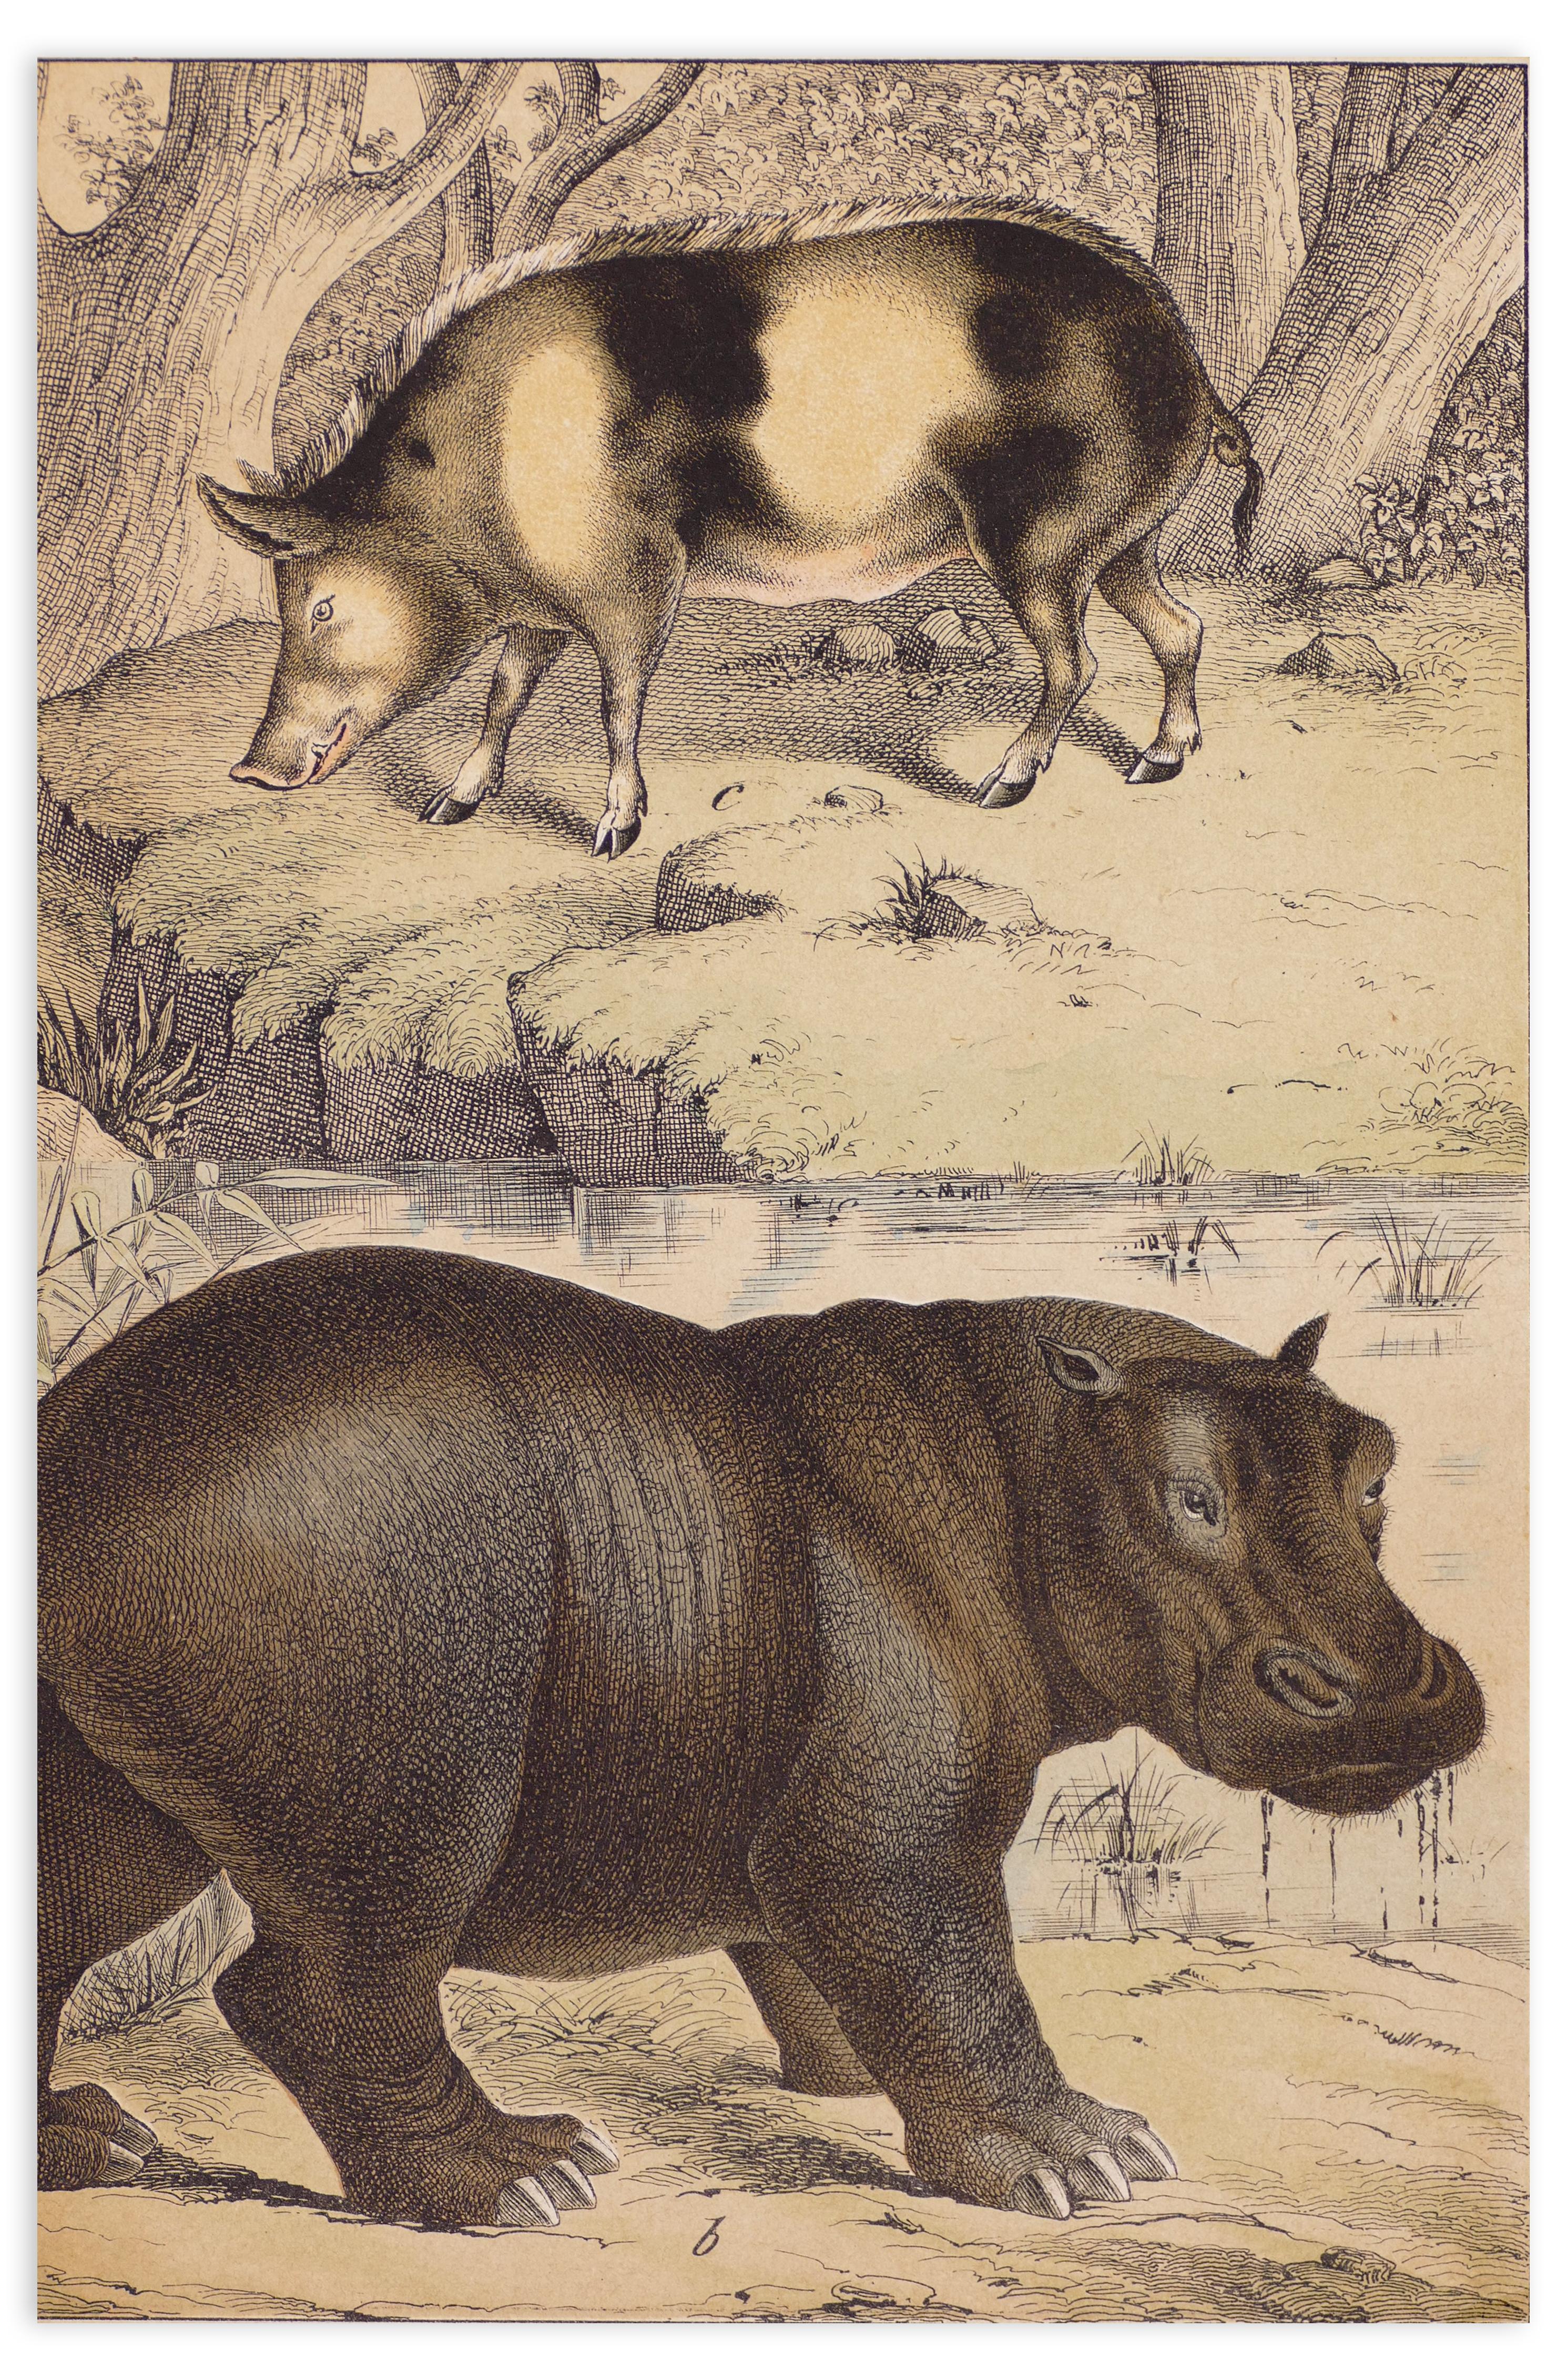 Unknown Animal Print - Wild Pig and Hippopotamus - Original Lithograph - Late 19th Century